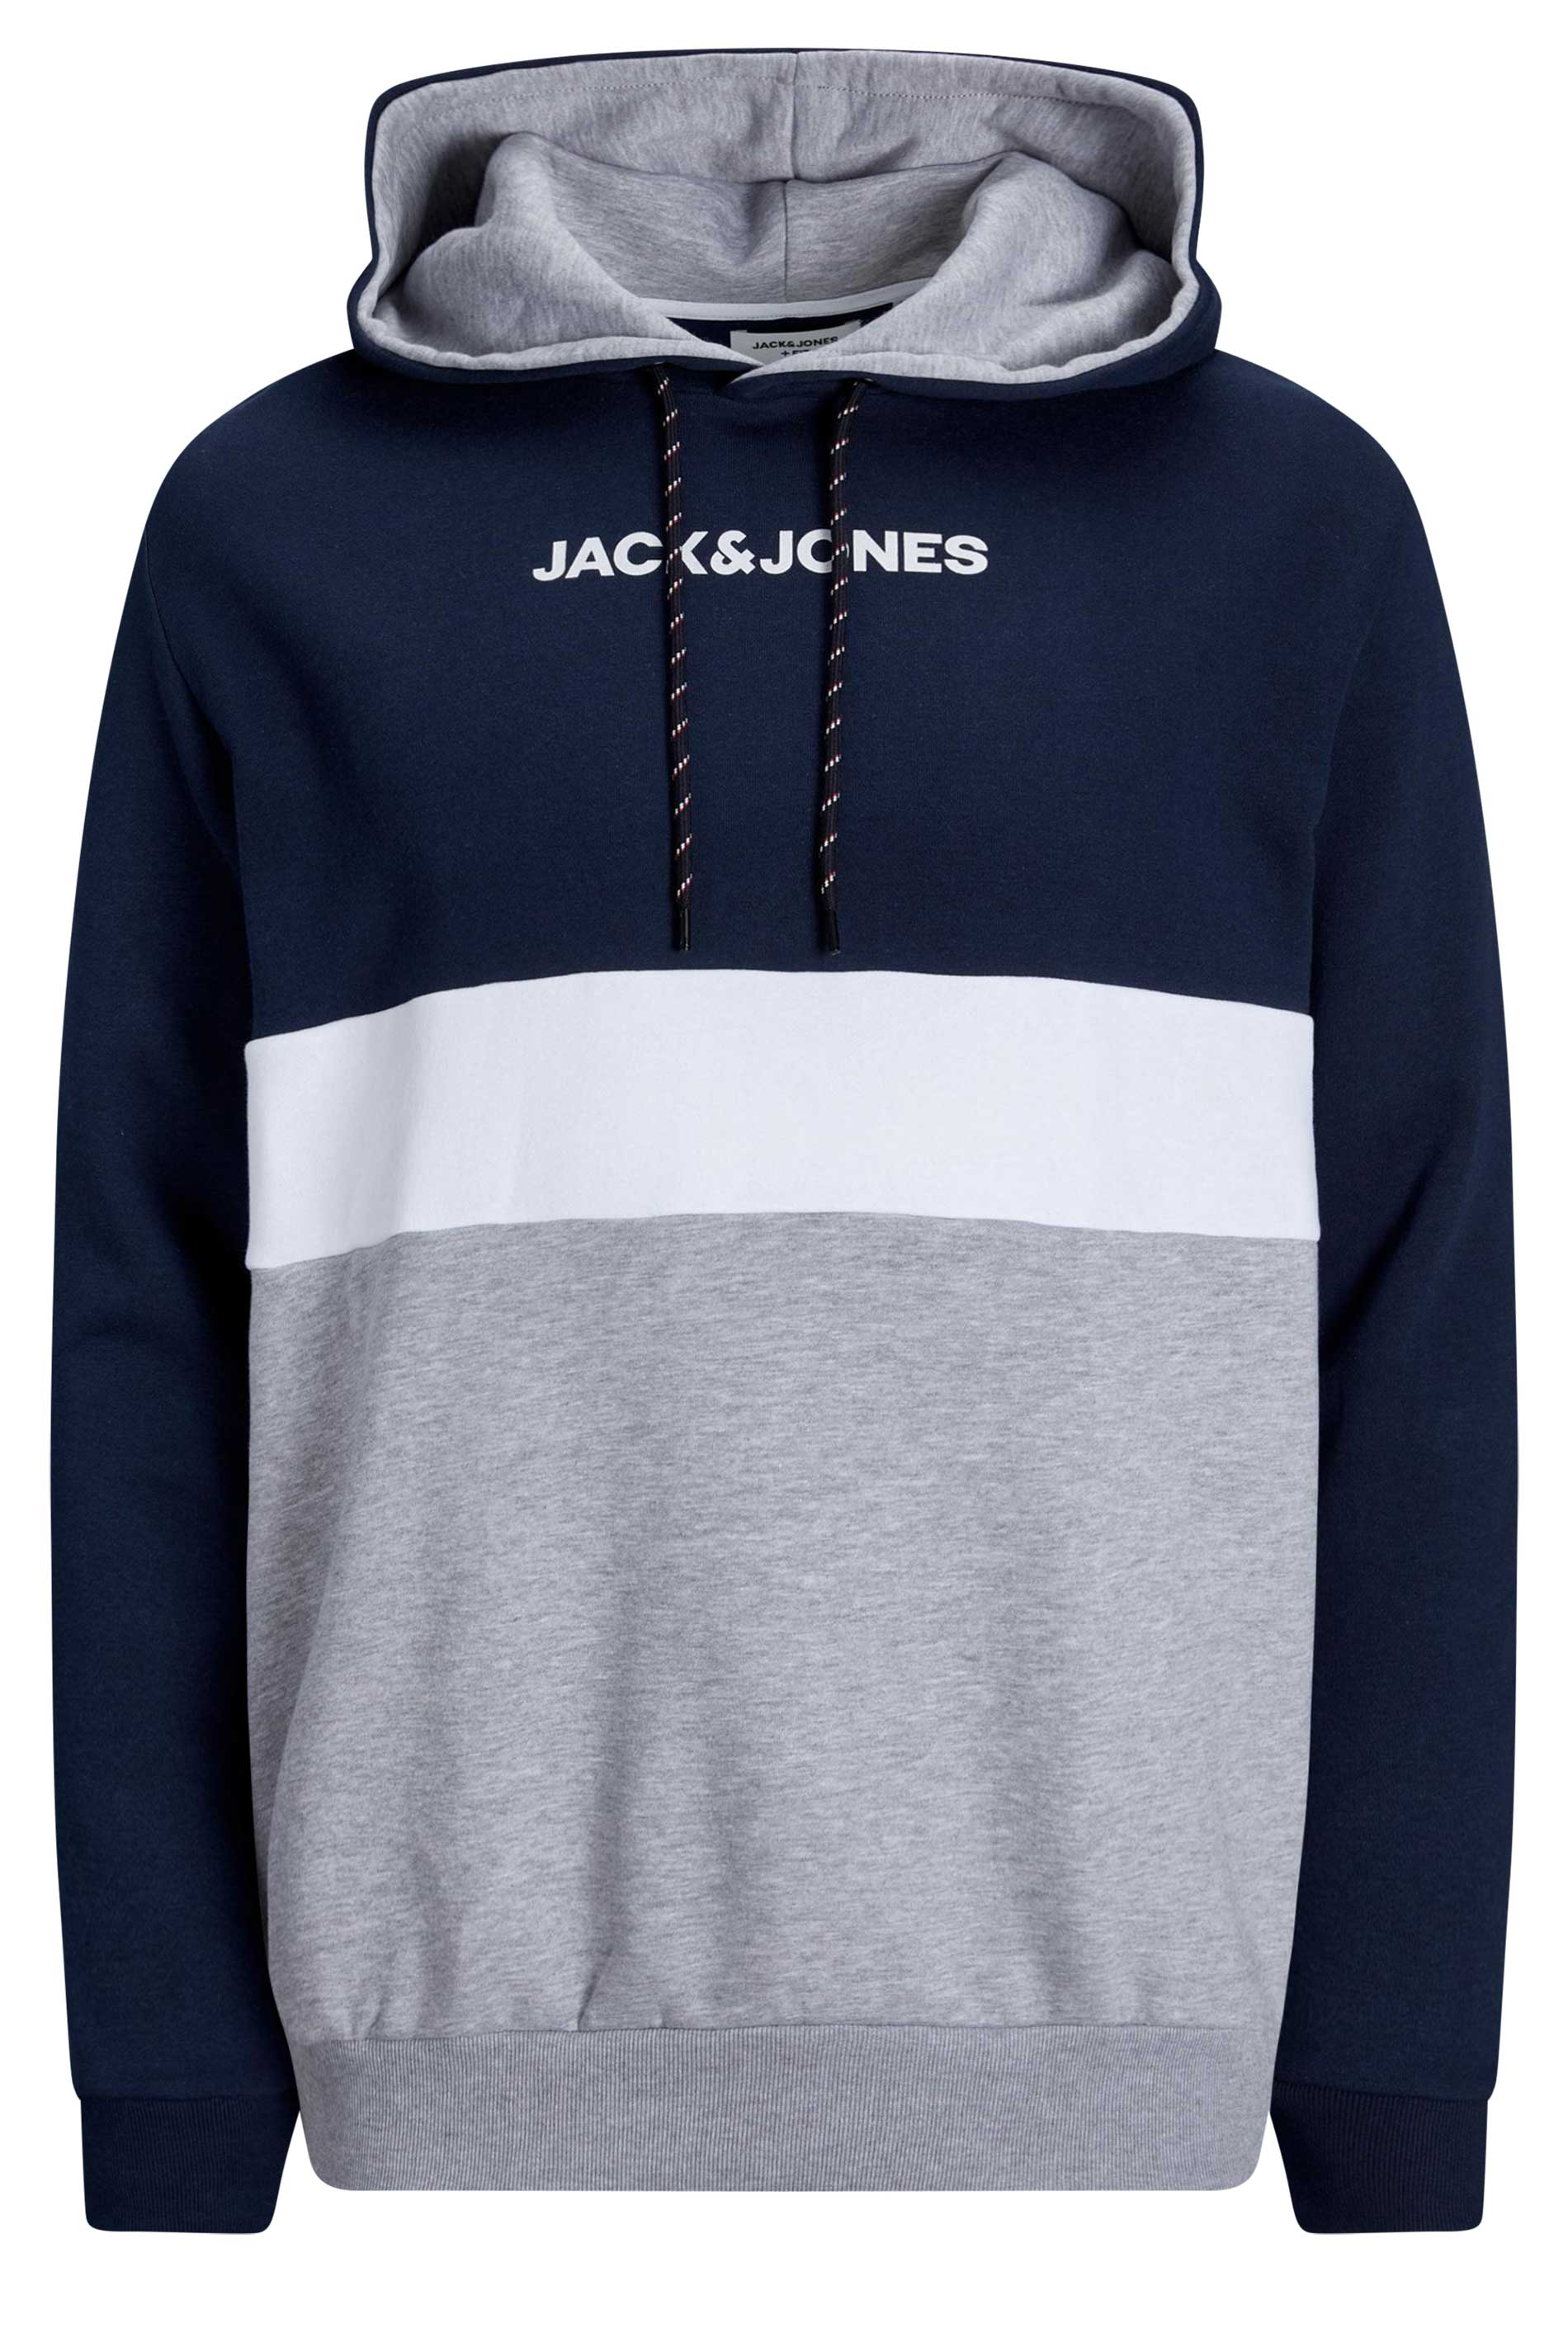 JACK & JONES Big & Tall Navy Blue Colour Block Hoodie | BadRhino 2